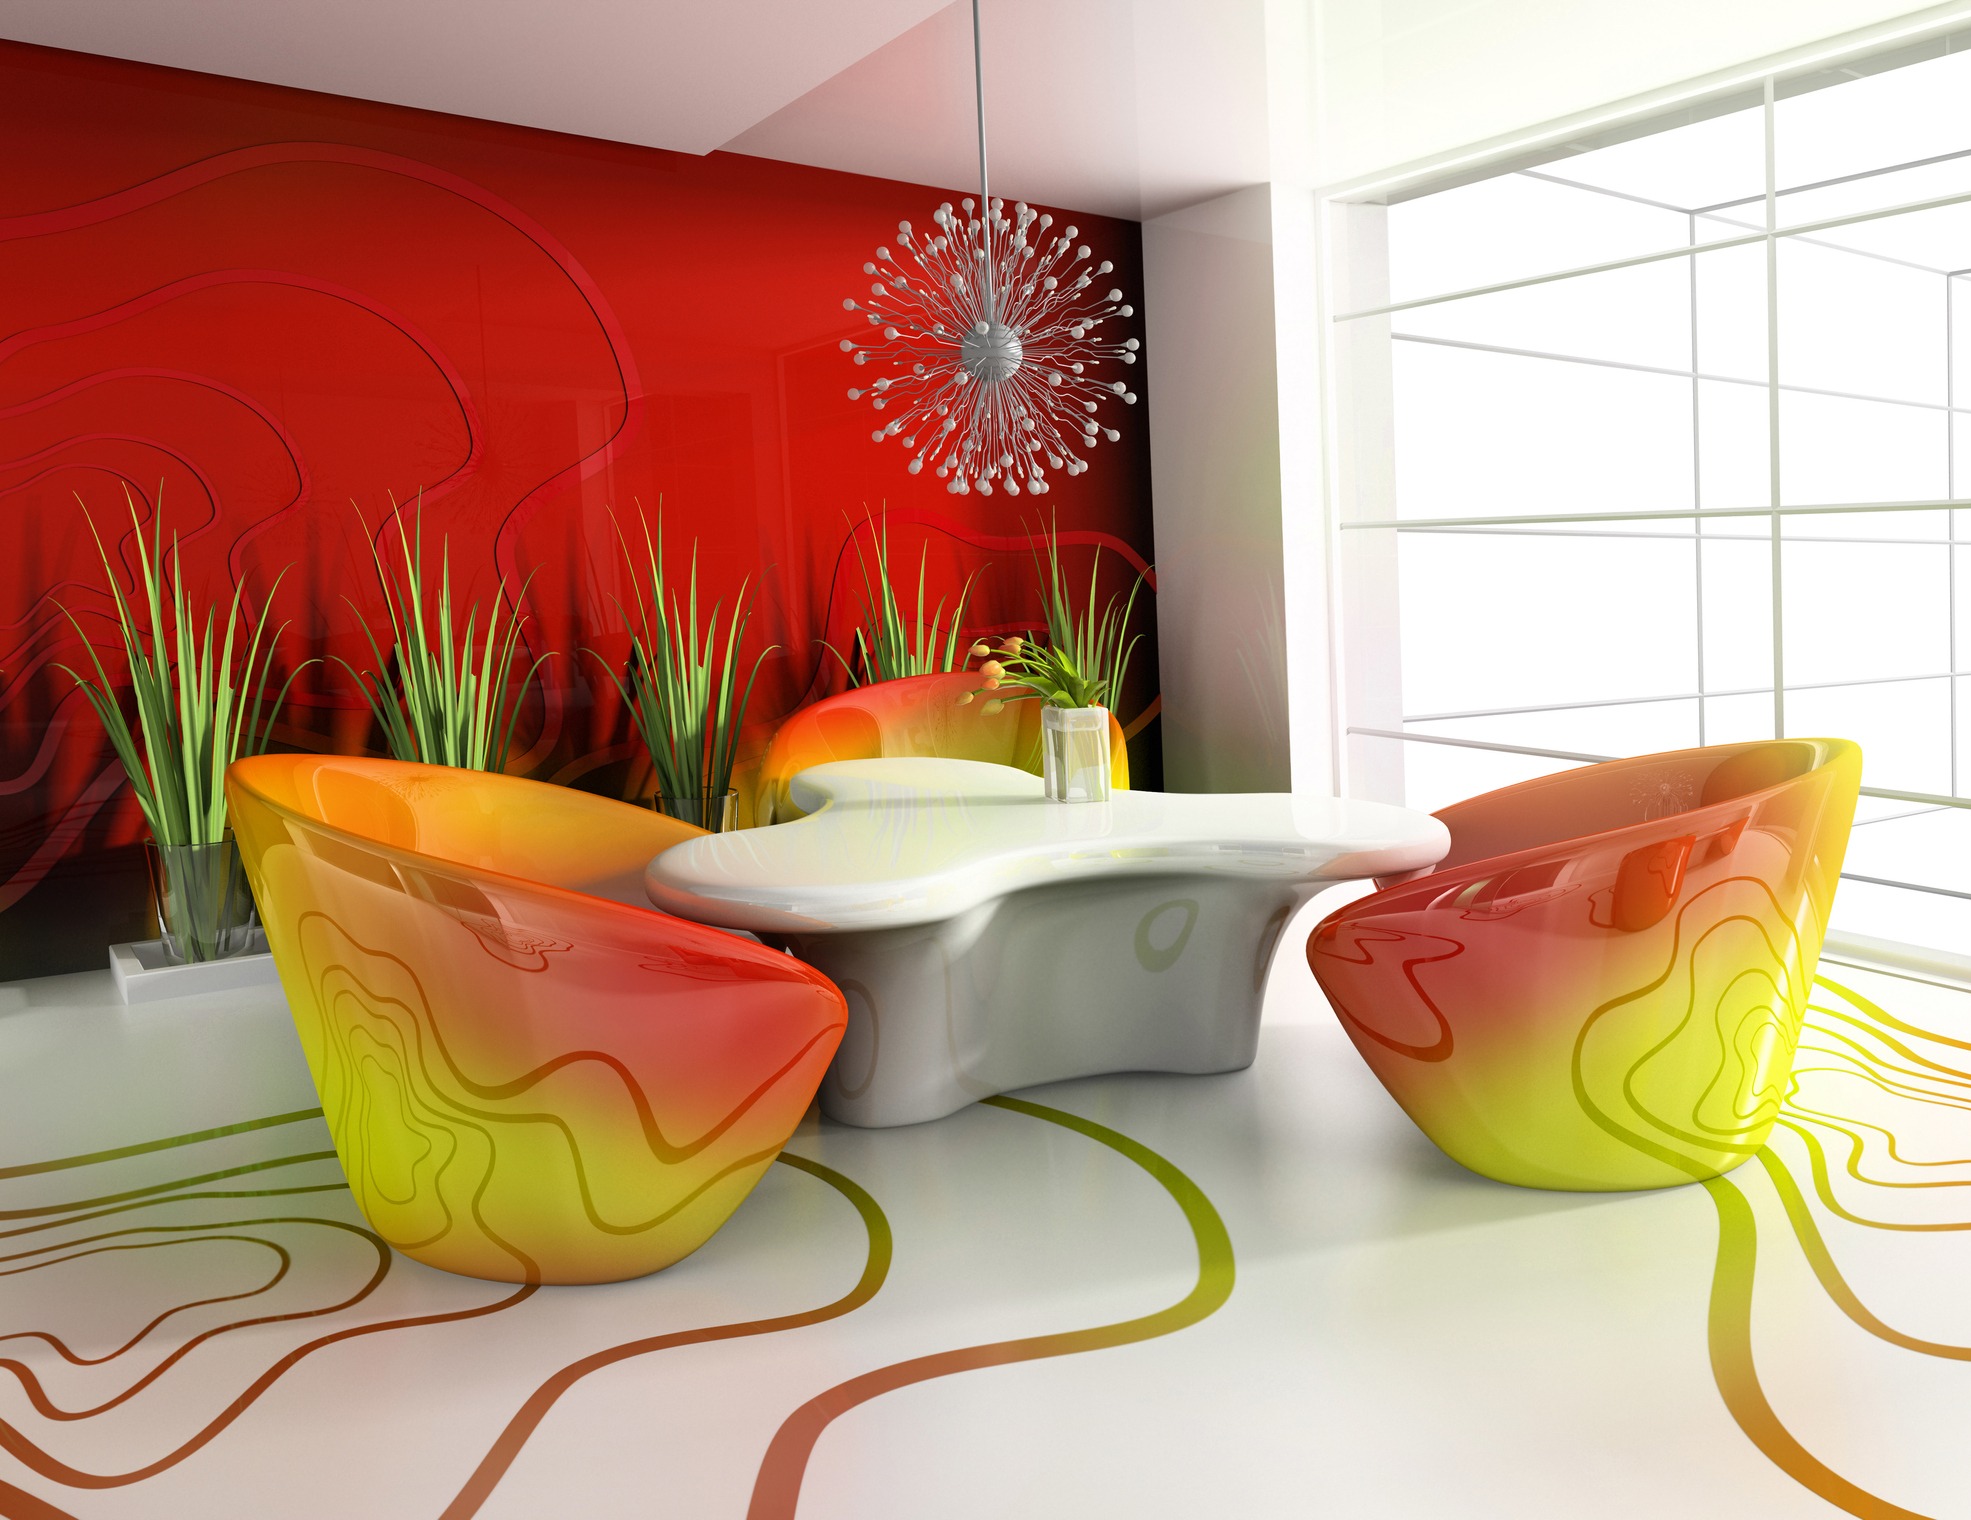 high tech and futuristic interior design themes